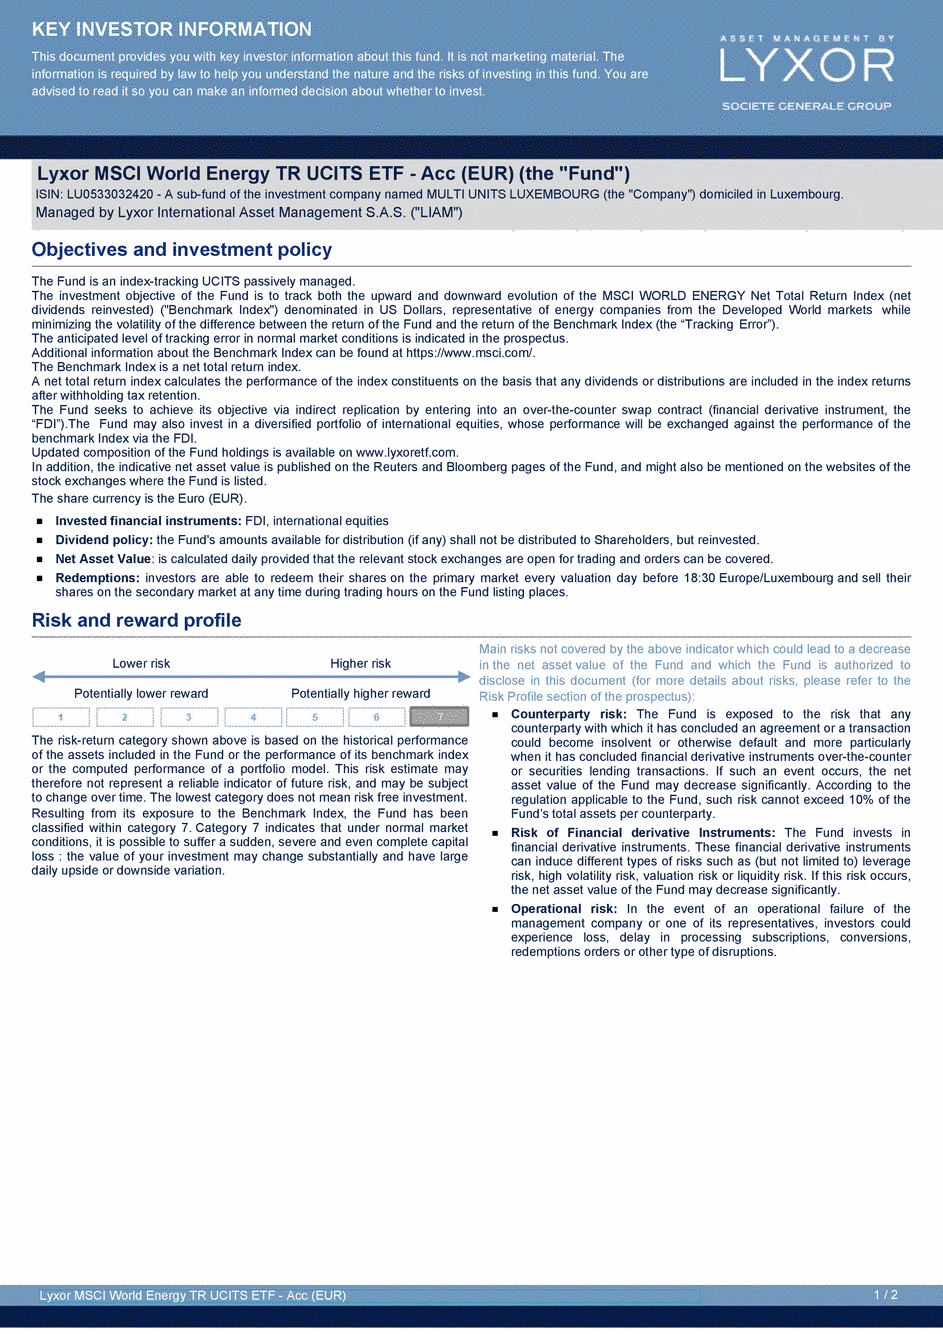 DICI Lyxor MSCI World Energy TR UCITS ETF - Acc (EUR) - 19/02/2021 - English